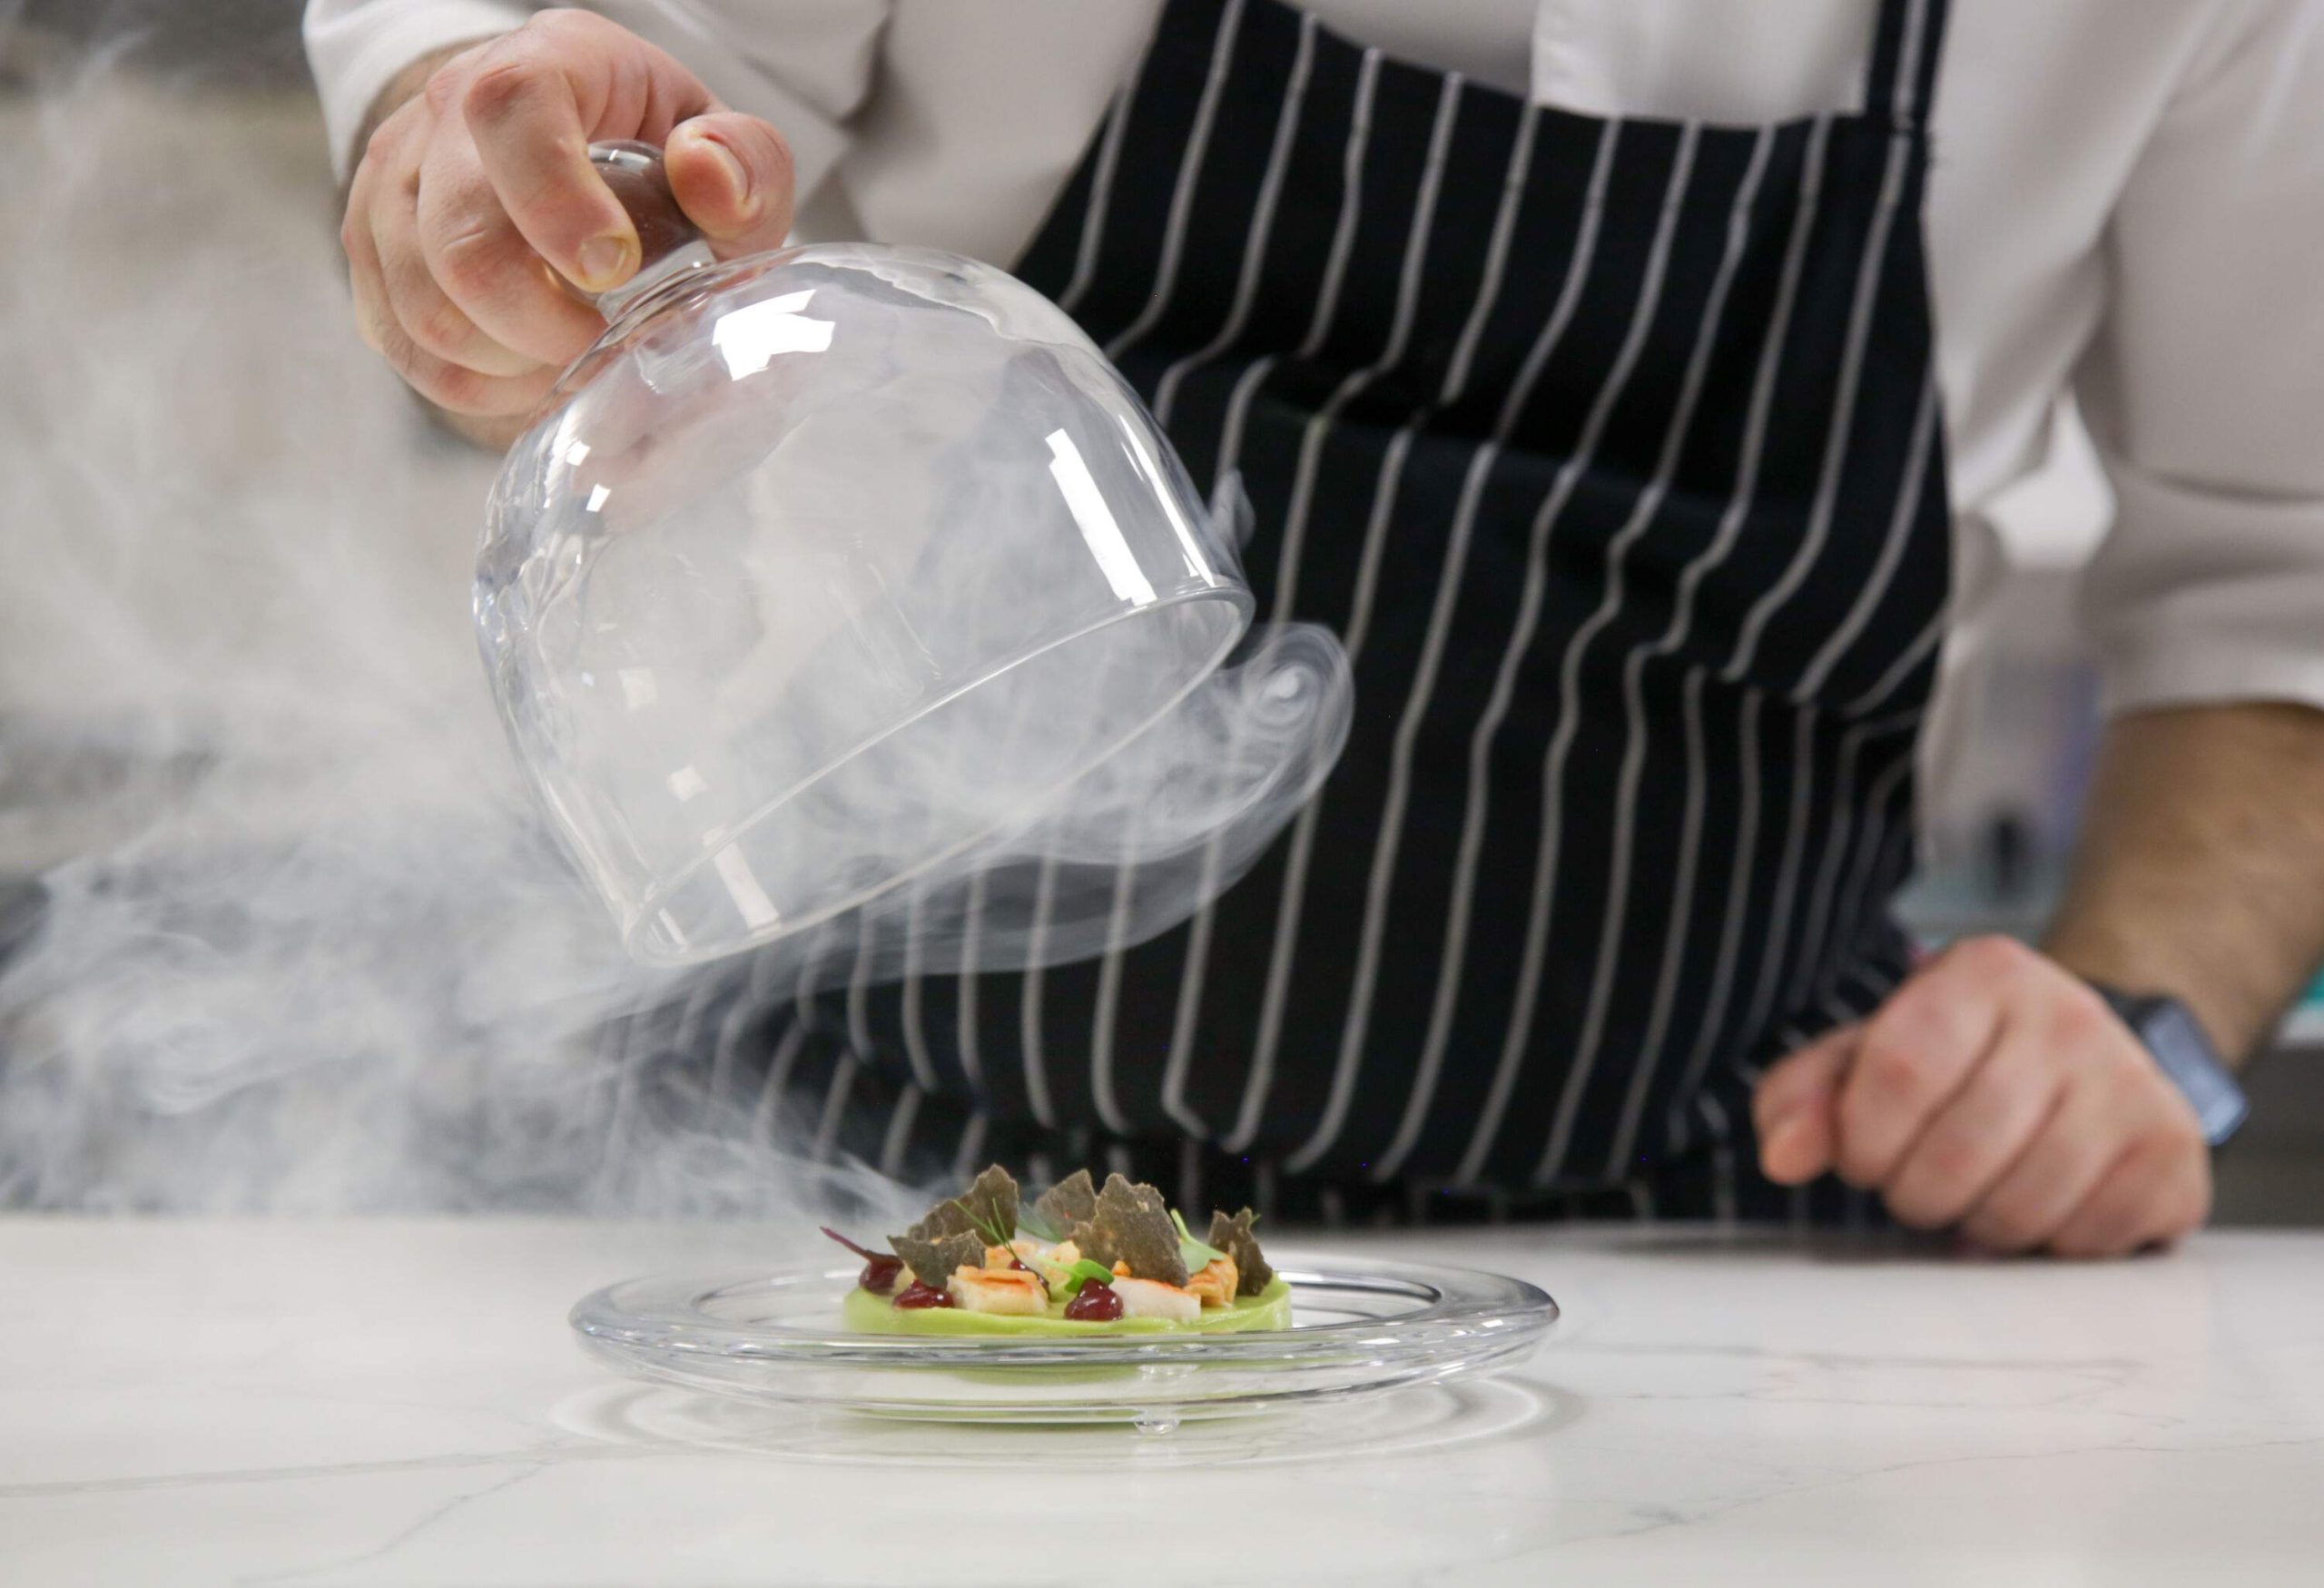 A hand lifts a glass lid of a smoky dessert on a plate.